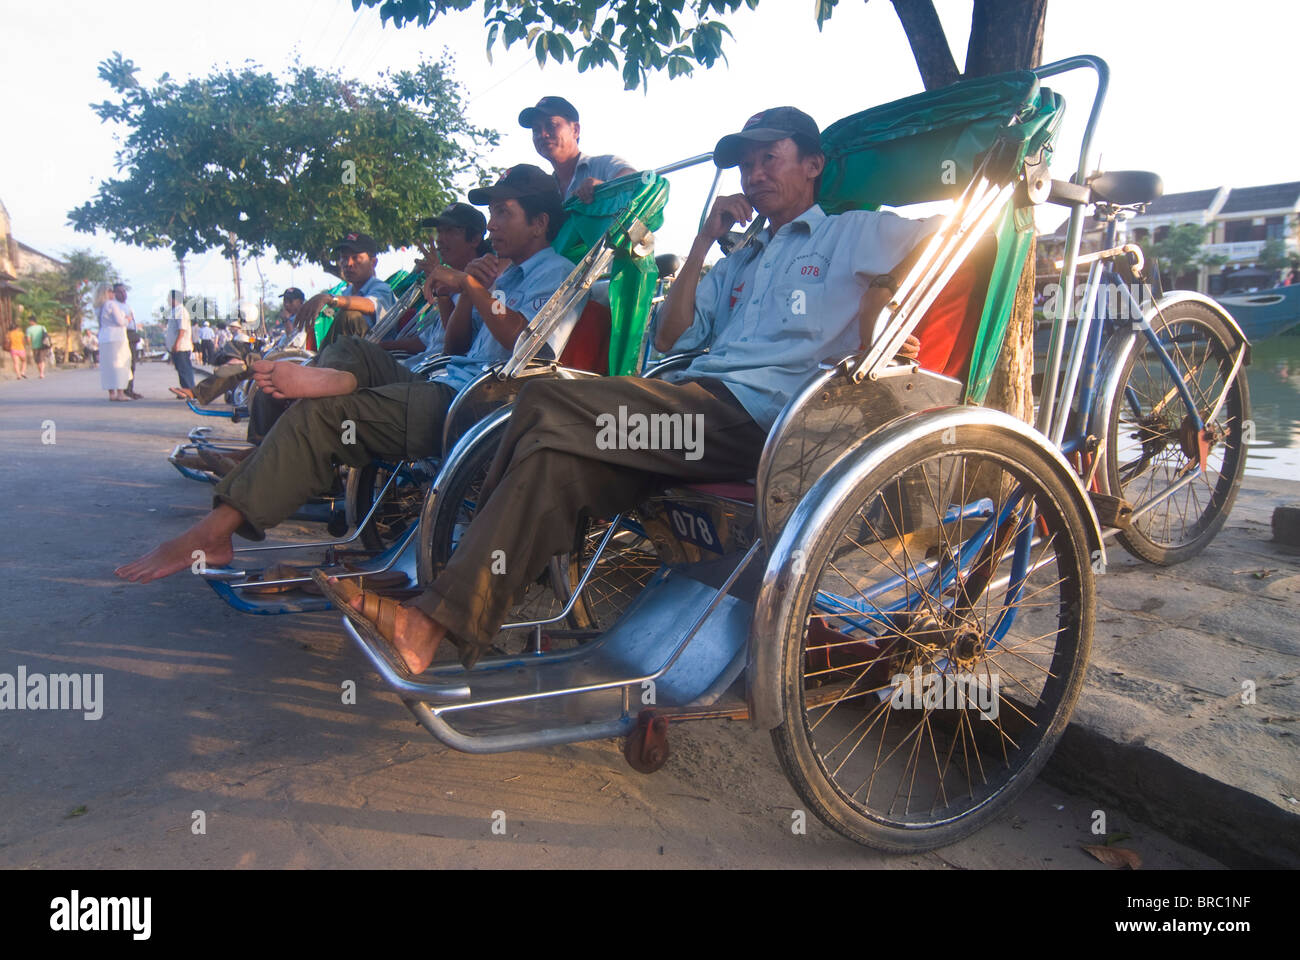 In rickshaw driver in seduta il riscio di attesa per i clienti, Hoi An, Vietnam, Indocina Foto Stock